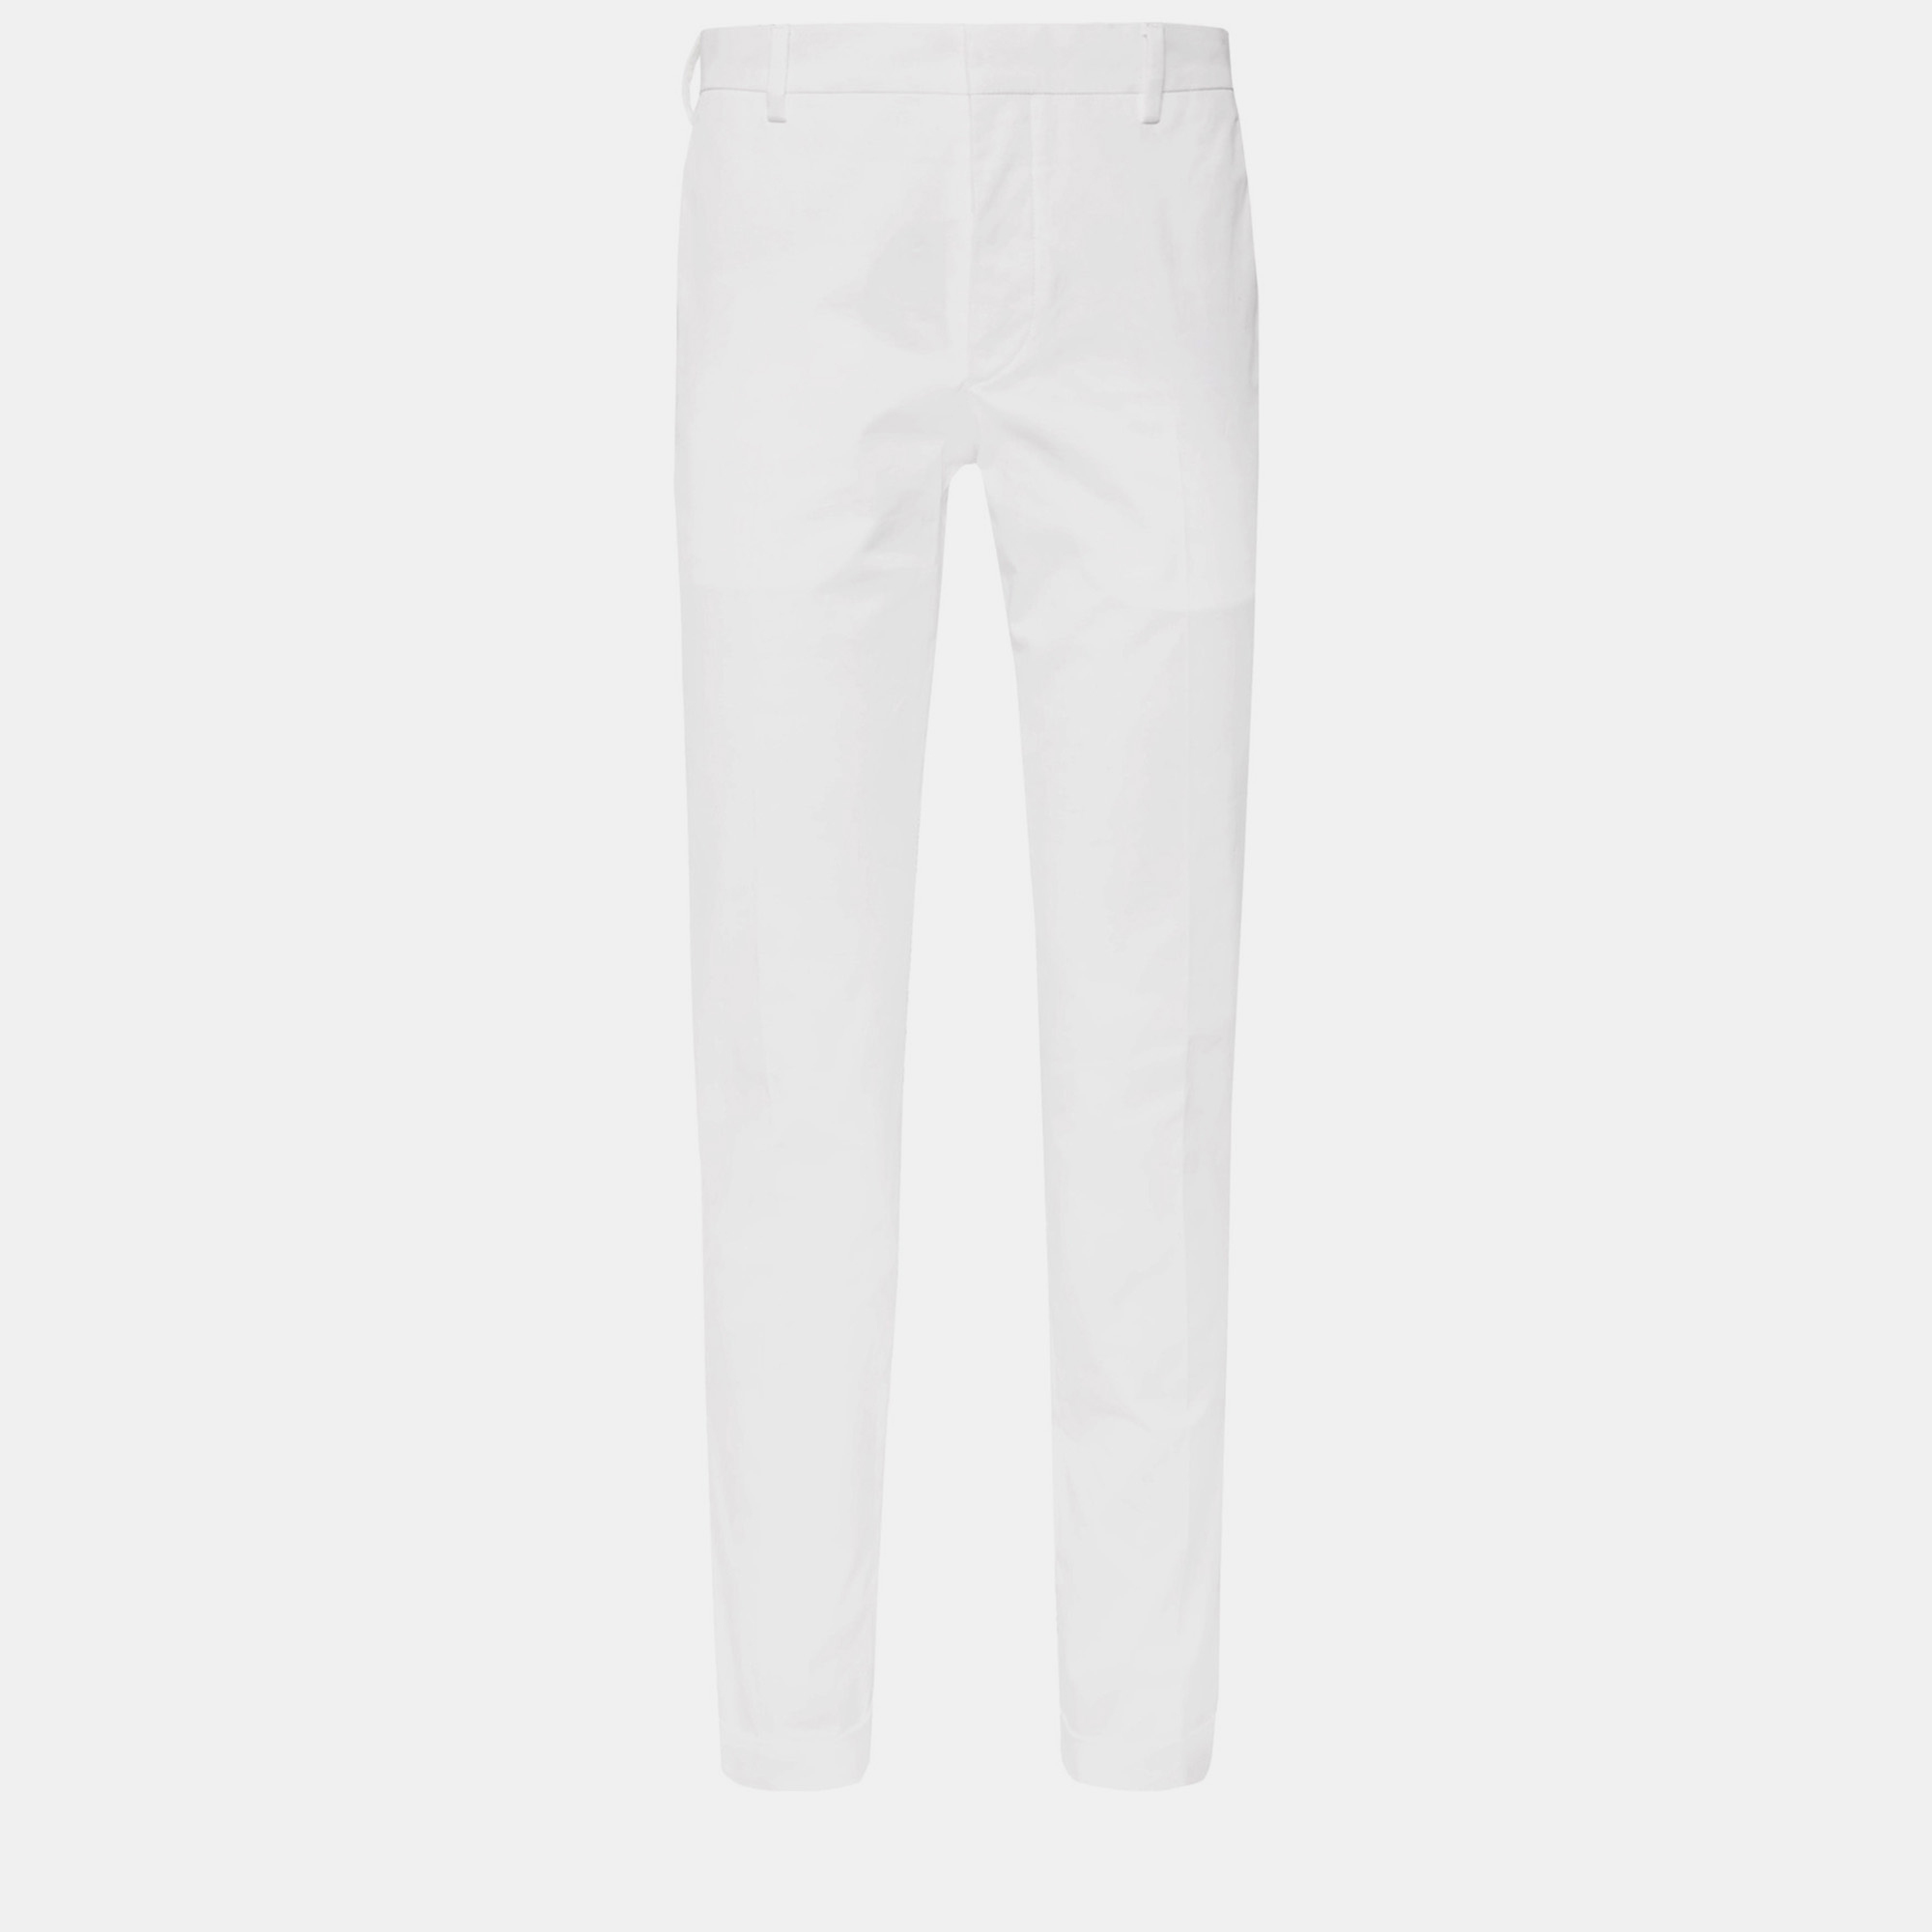 Prada cotton pants 56